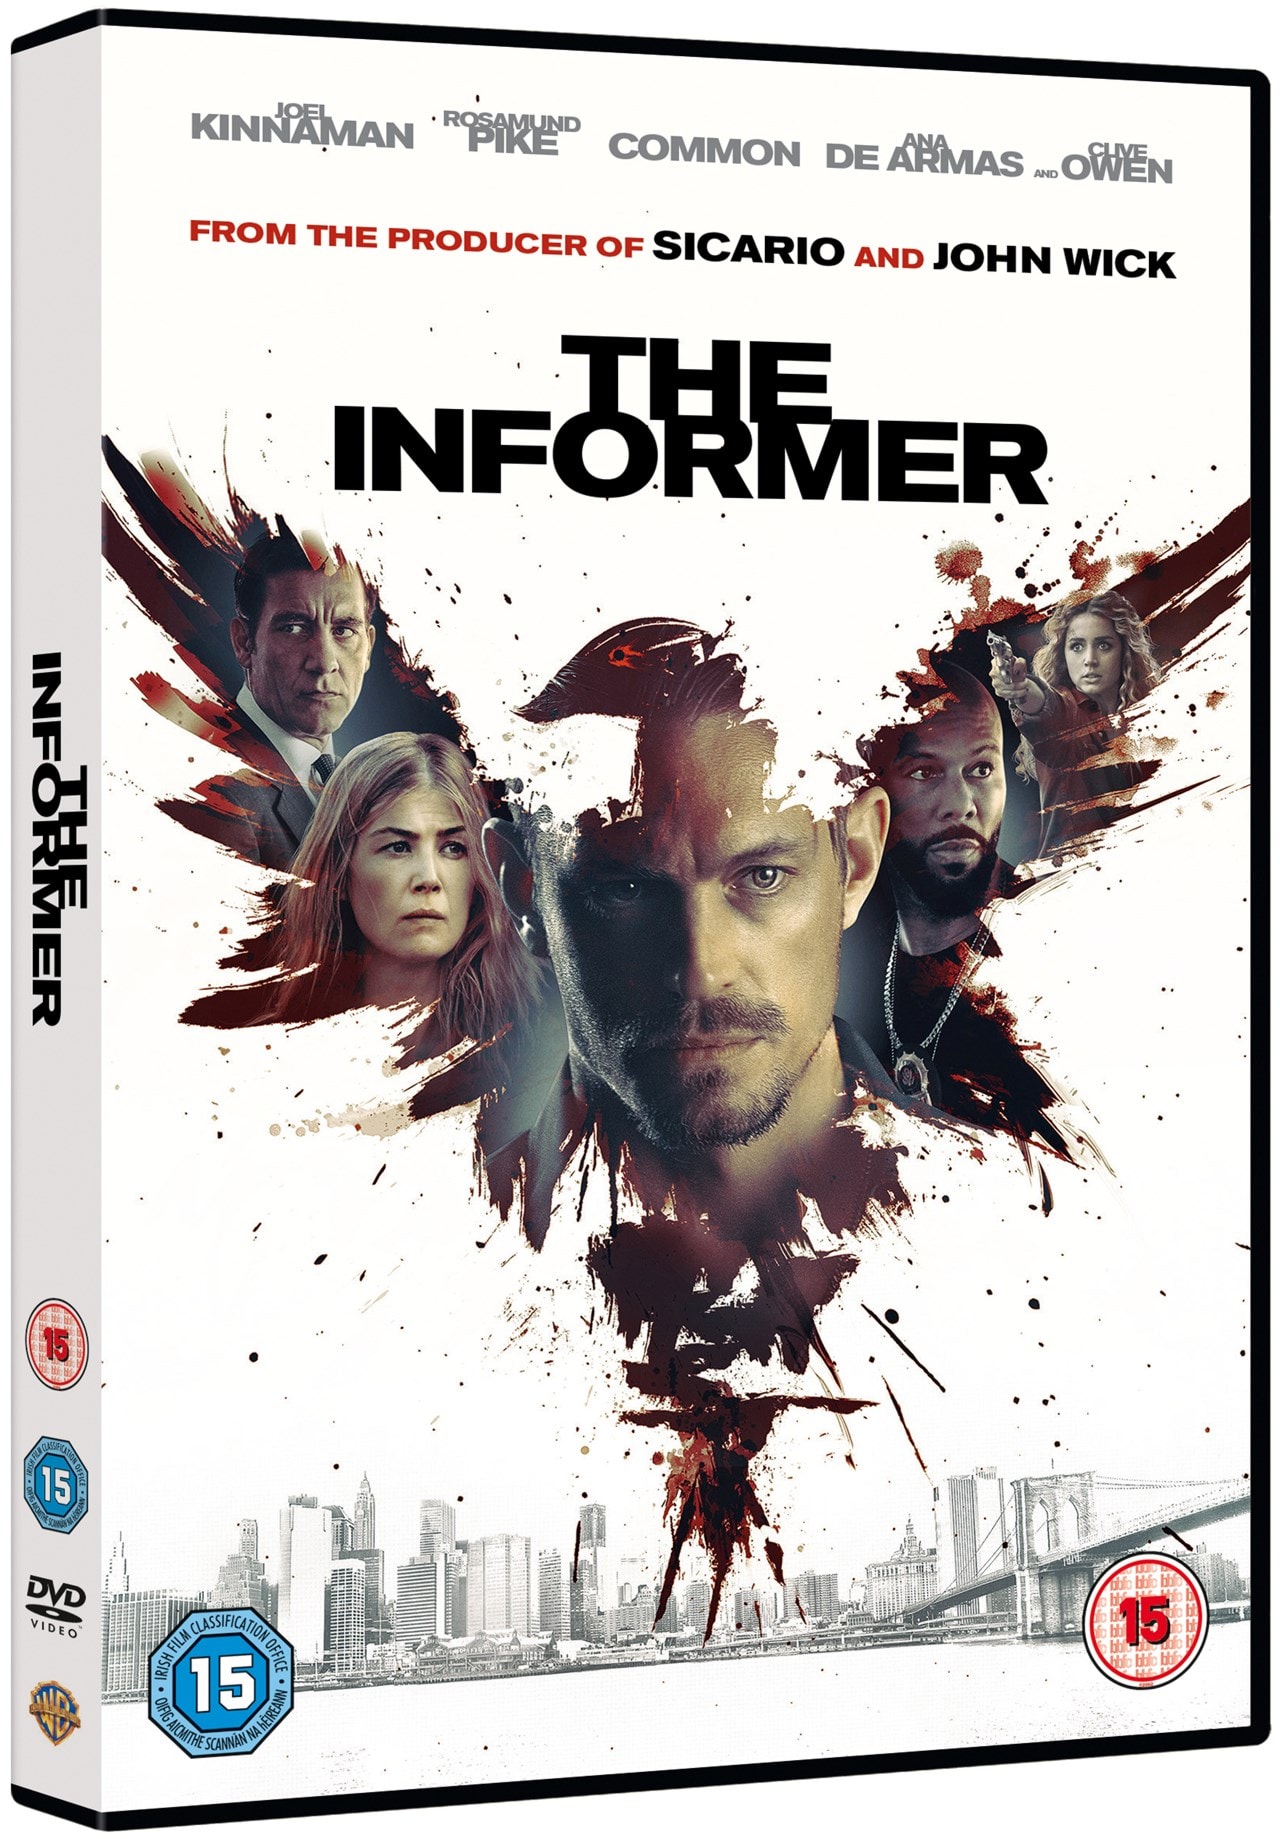 The Informer | DVD | Free shipping over £20 | HMV Store